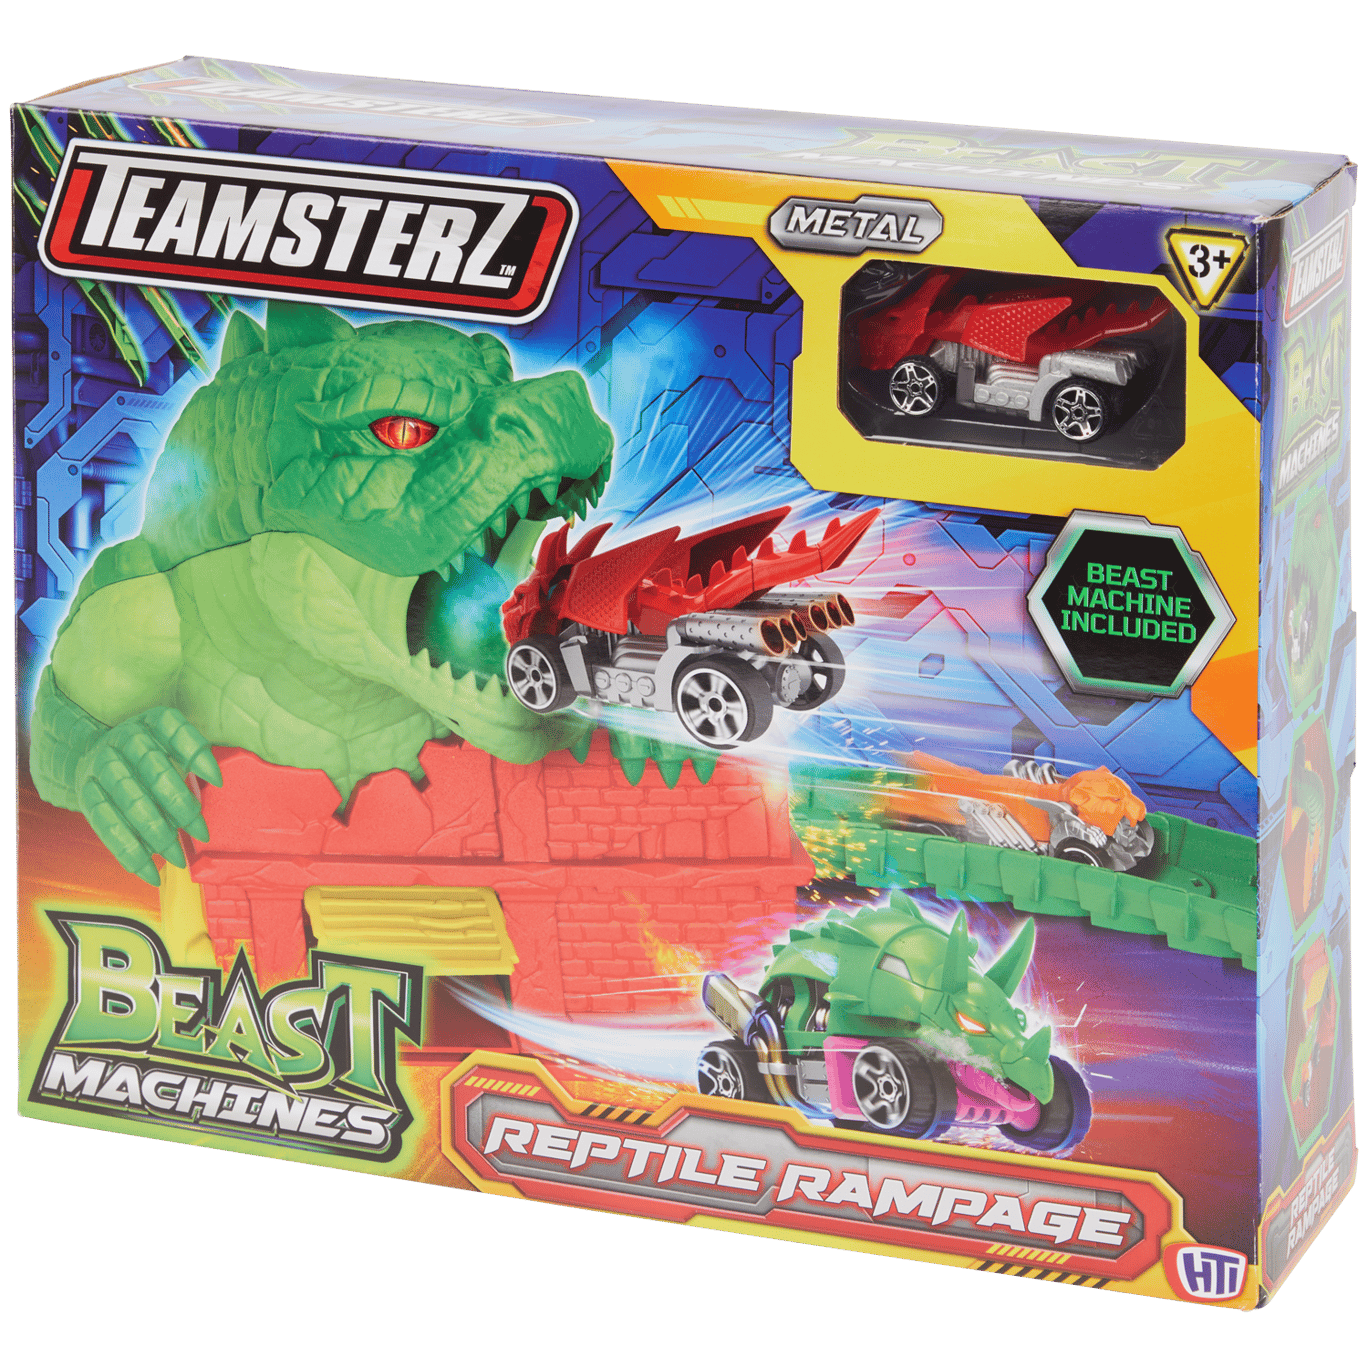 Set de juguetes Teamsterz Beast Machines